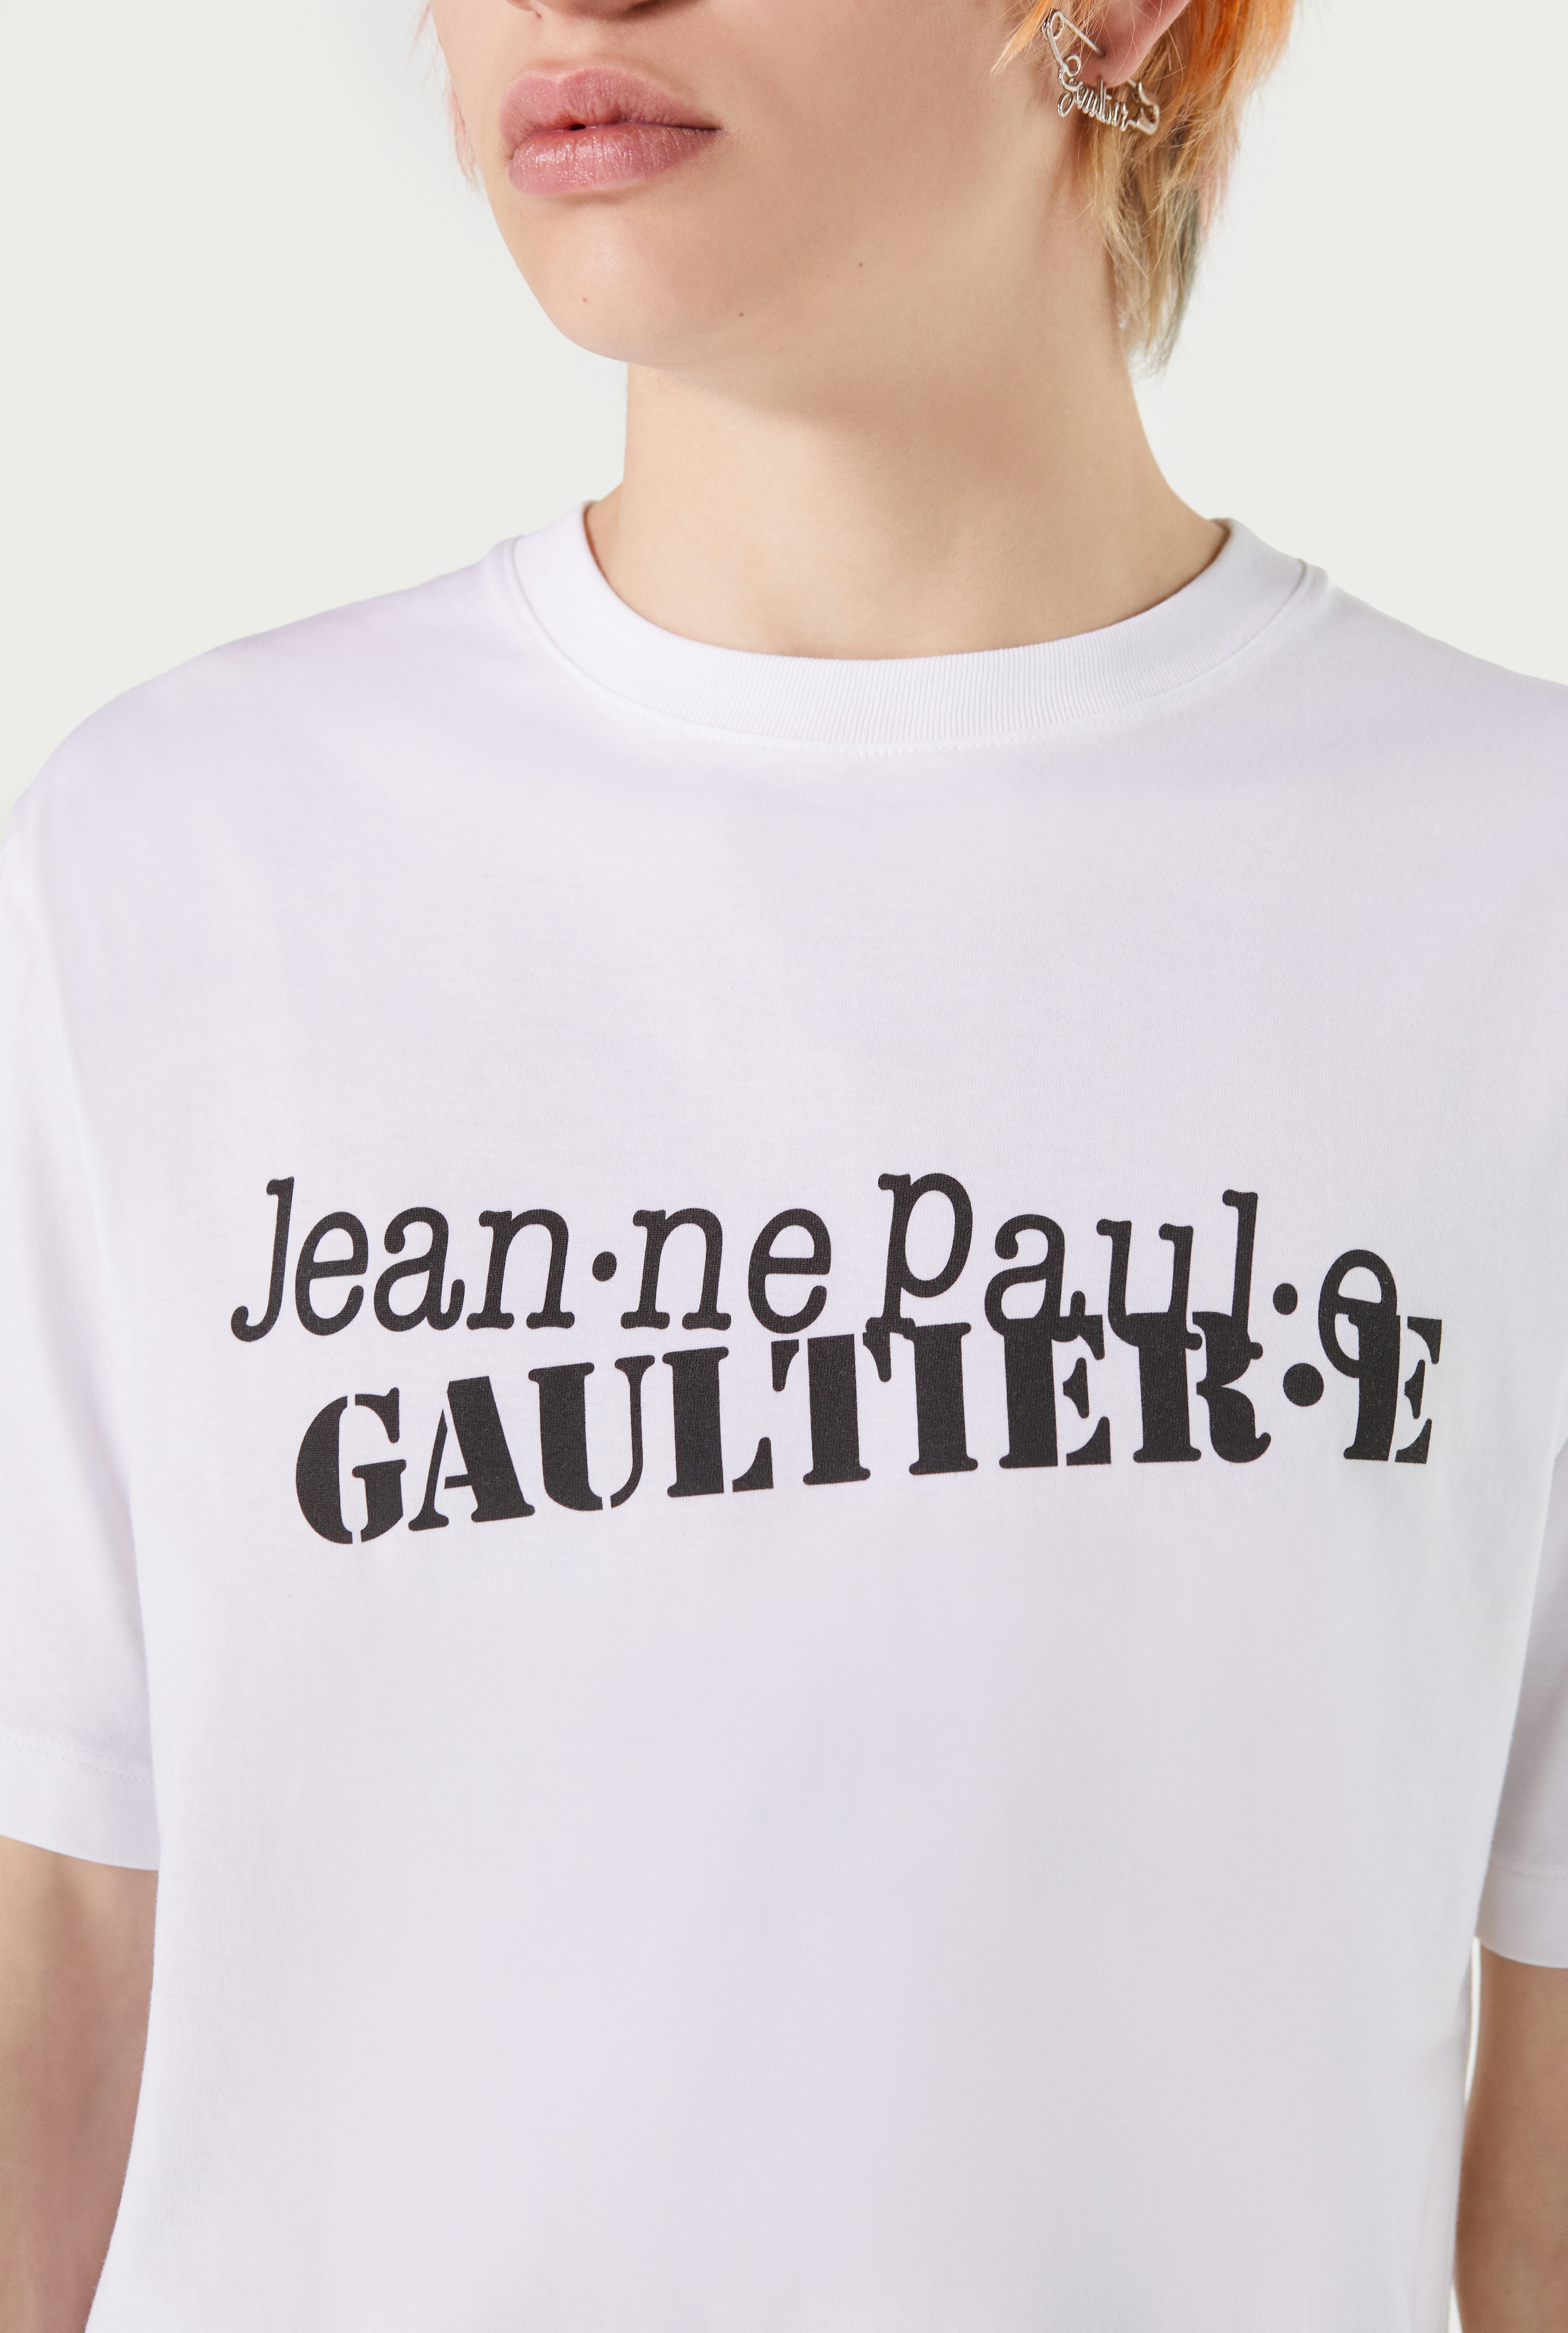 Pride - The Jean.ne Paul.e Gaultier.e T-shirt